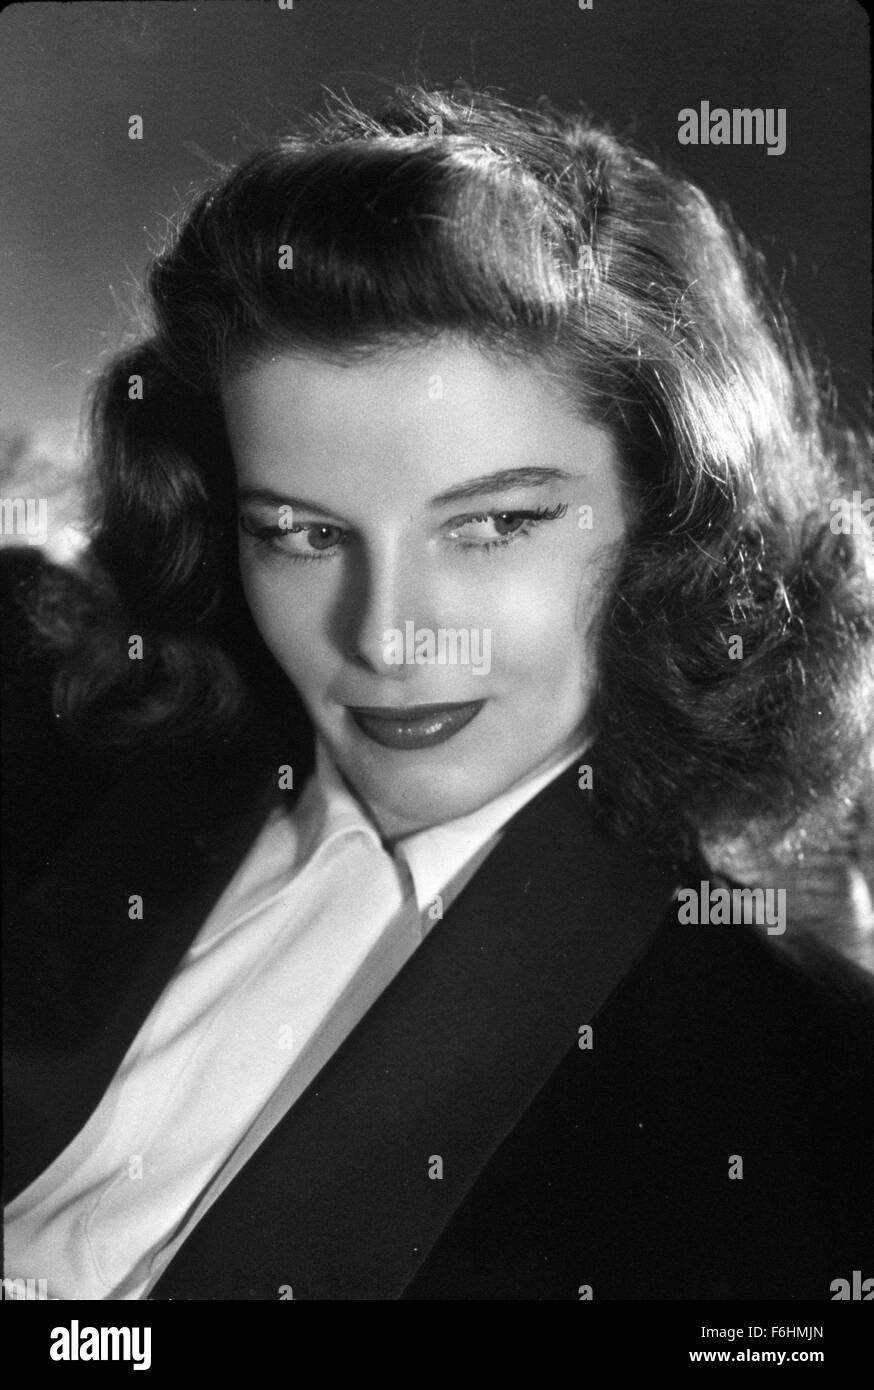 1942, Film Title: WOMAN OF THE YEAR, Director: GEORGE STEVENS, Studio: MGM, Pictured: KATHARINE HEPBURN, GEORGE STEVENS, LOOKING AWAY, BLAZER, STUDIO. (Credit Image: SNAP) Stock Photo